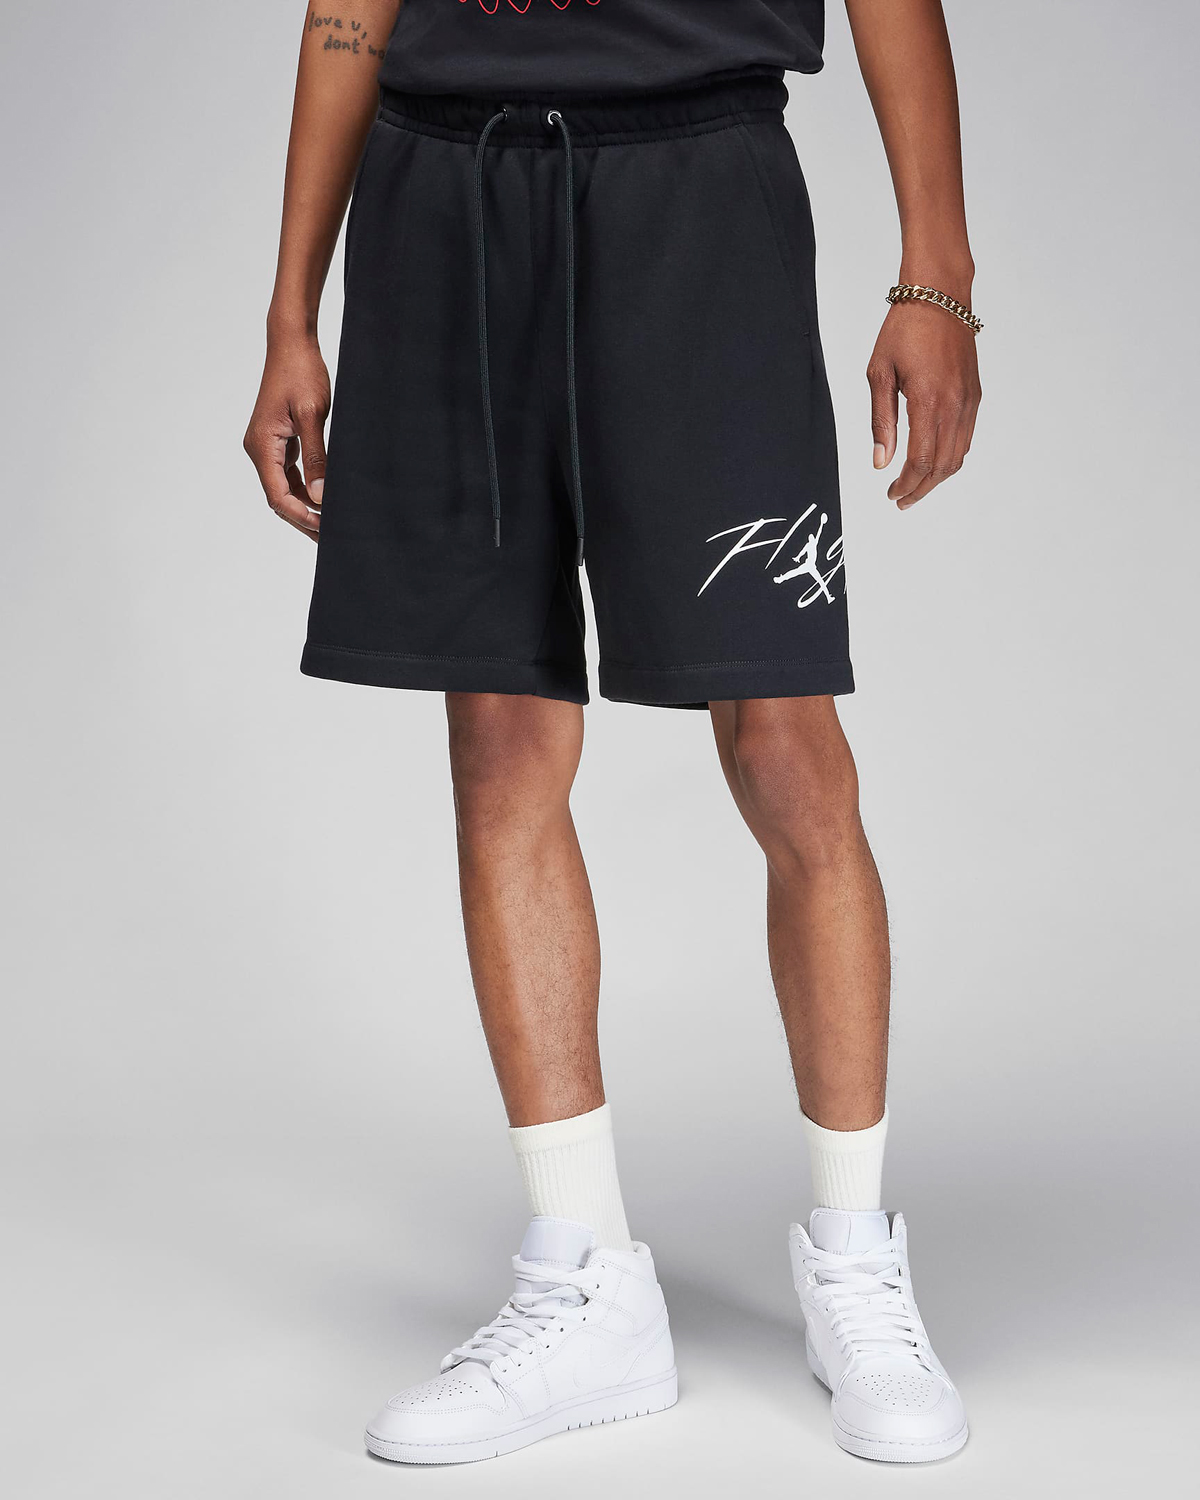 Jordan-Brooklyn-Fleece-Shorts-Black-White-1